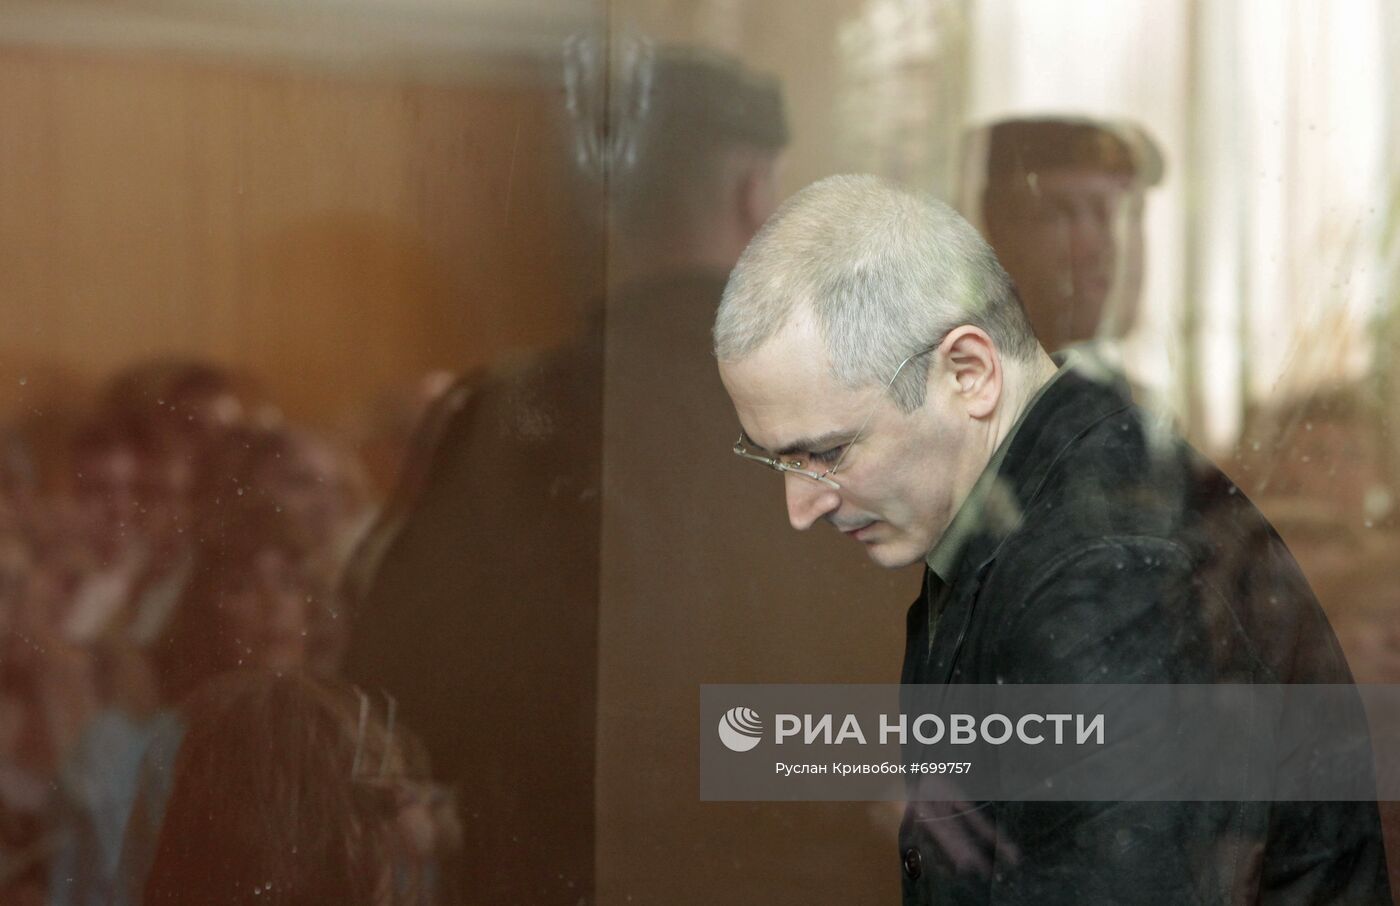 Заседание суда по второму делу М. Ходорковского и П. Лебедева